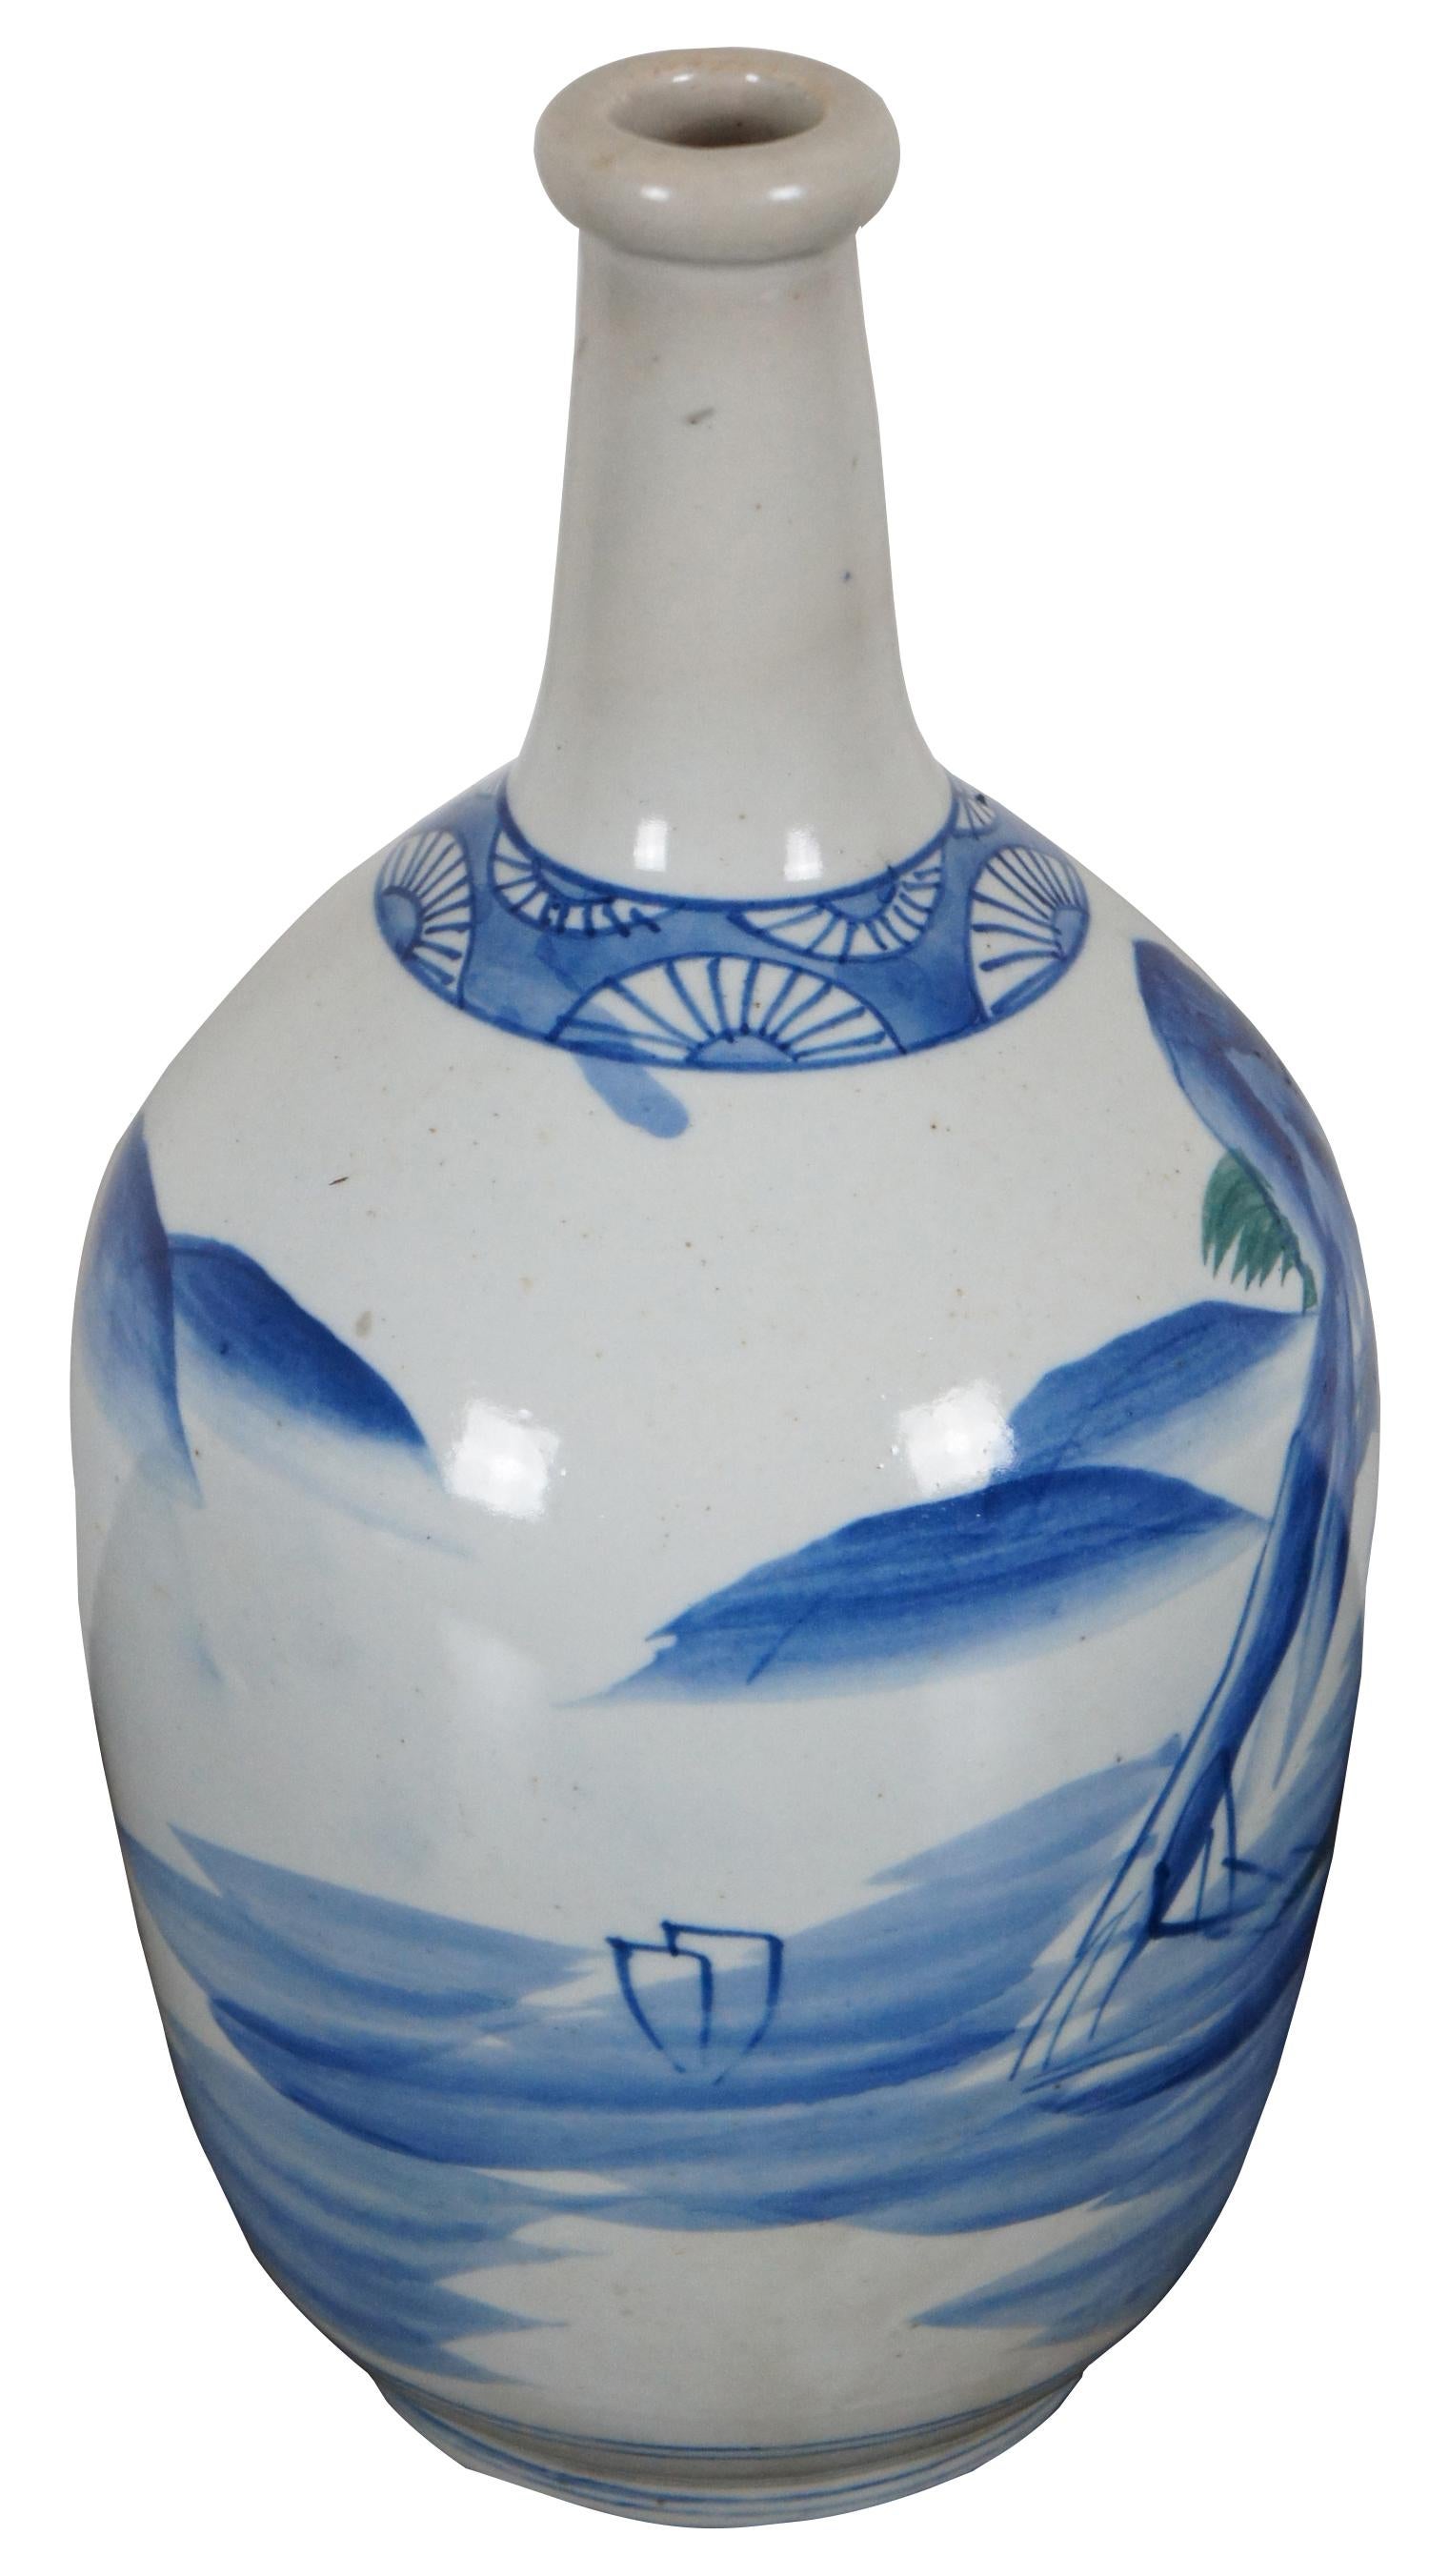 Antique Japanese ceramic tokkuri or sake bottle with a blue painted landscape.
  